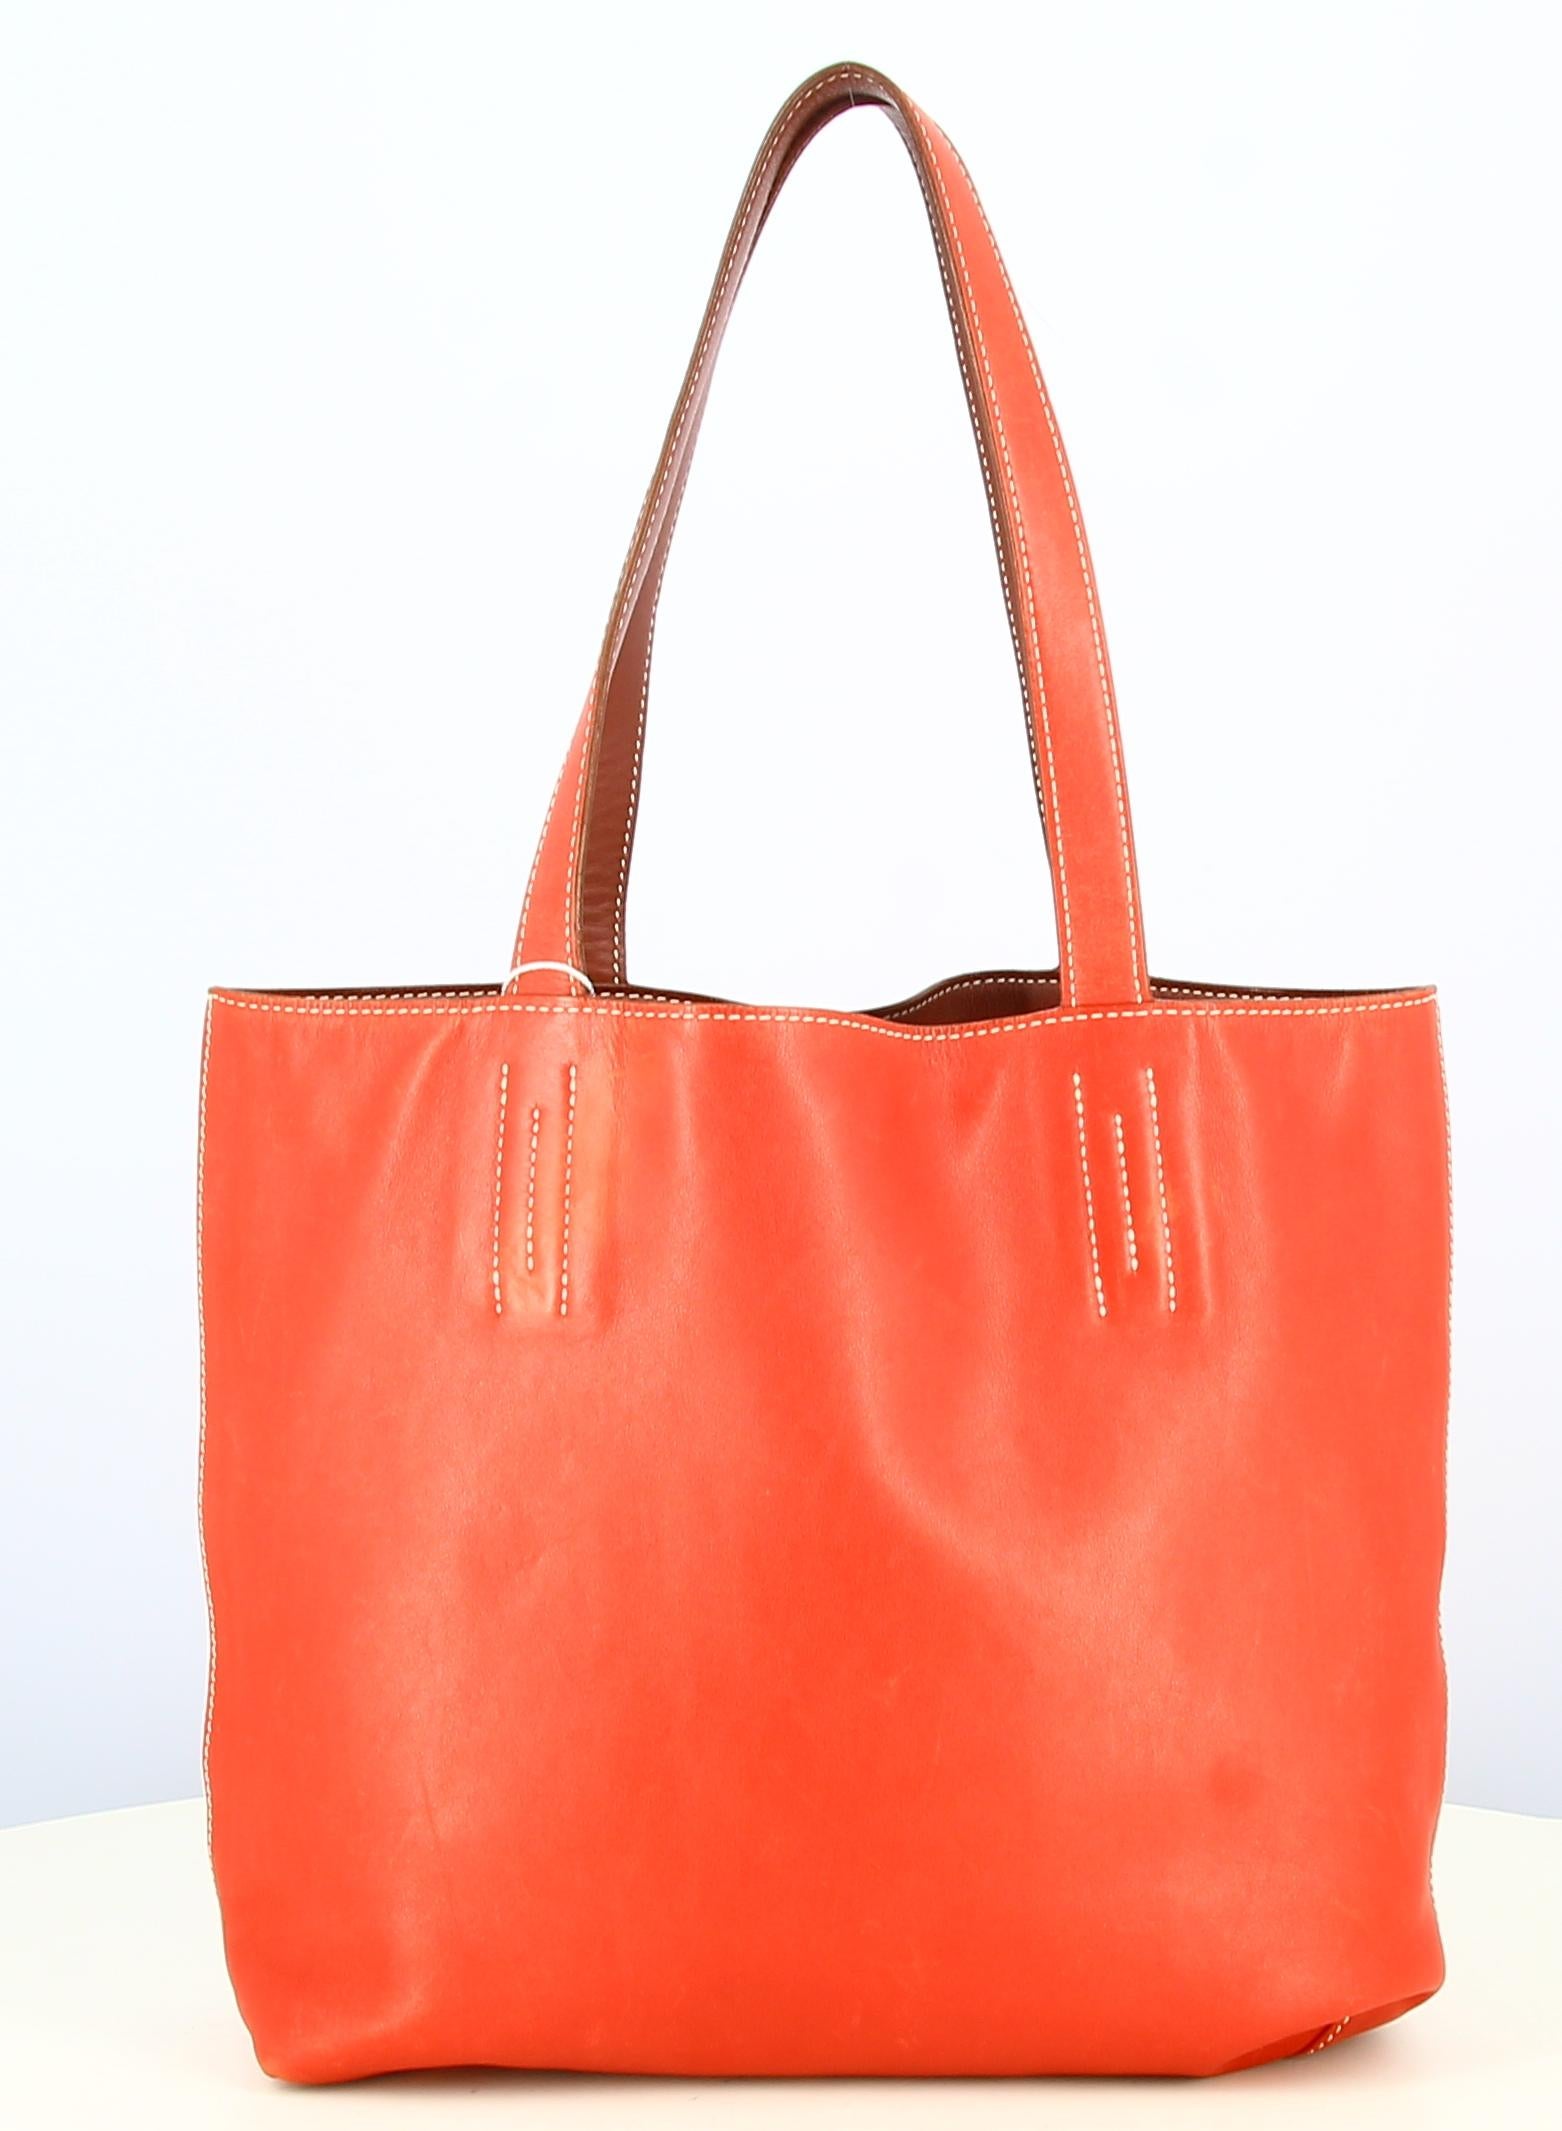 2003 Hermès Red Leather Handbag   Double sens For Sale 1